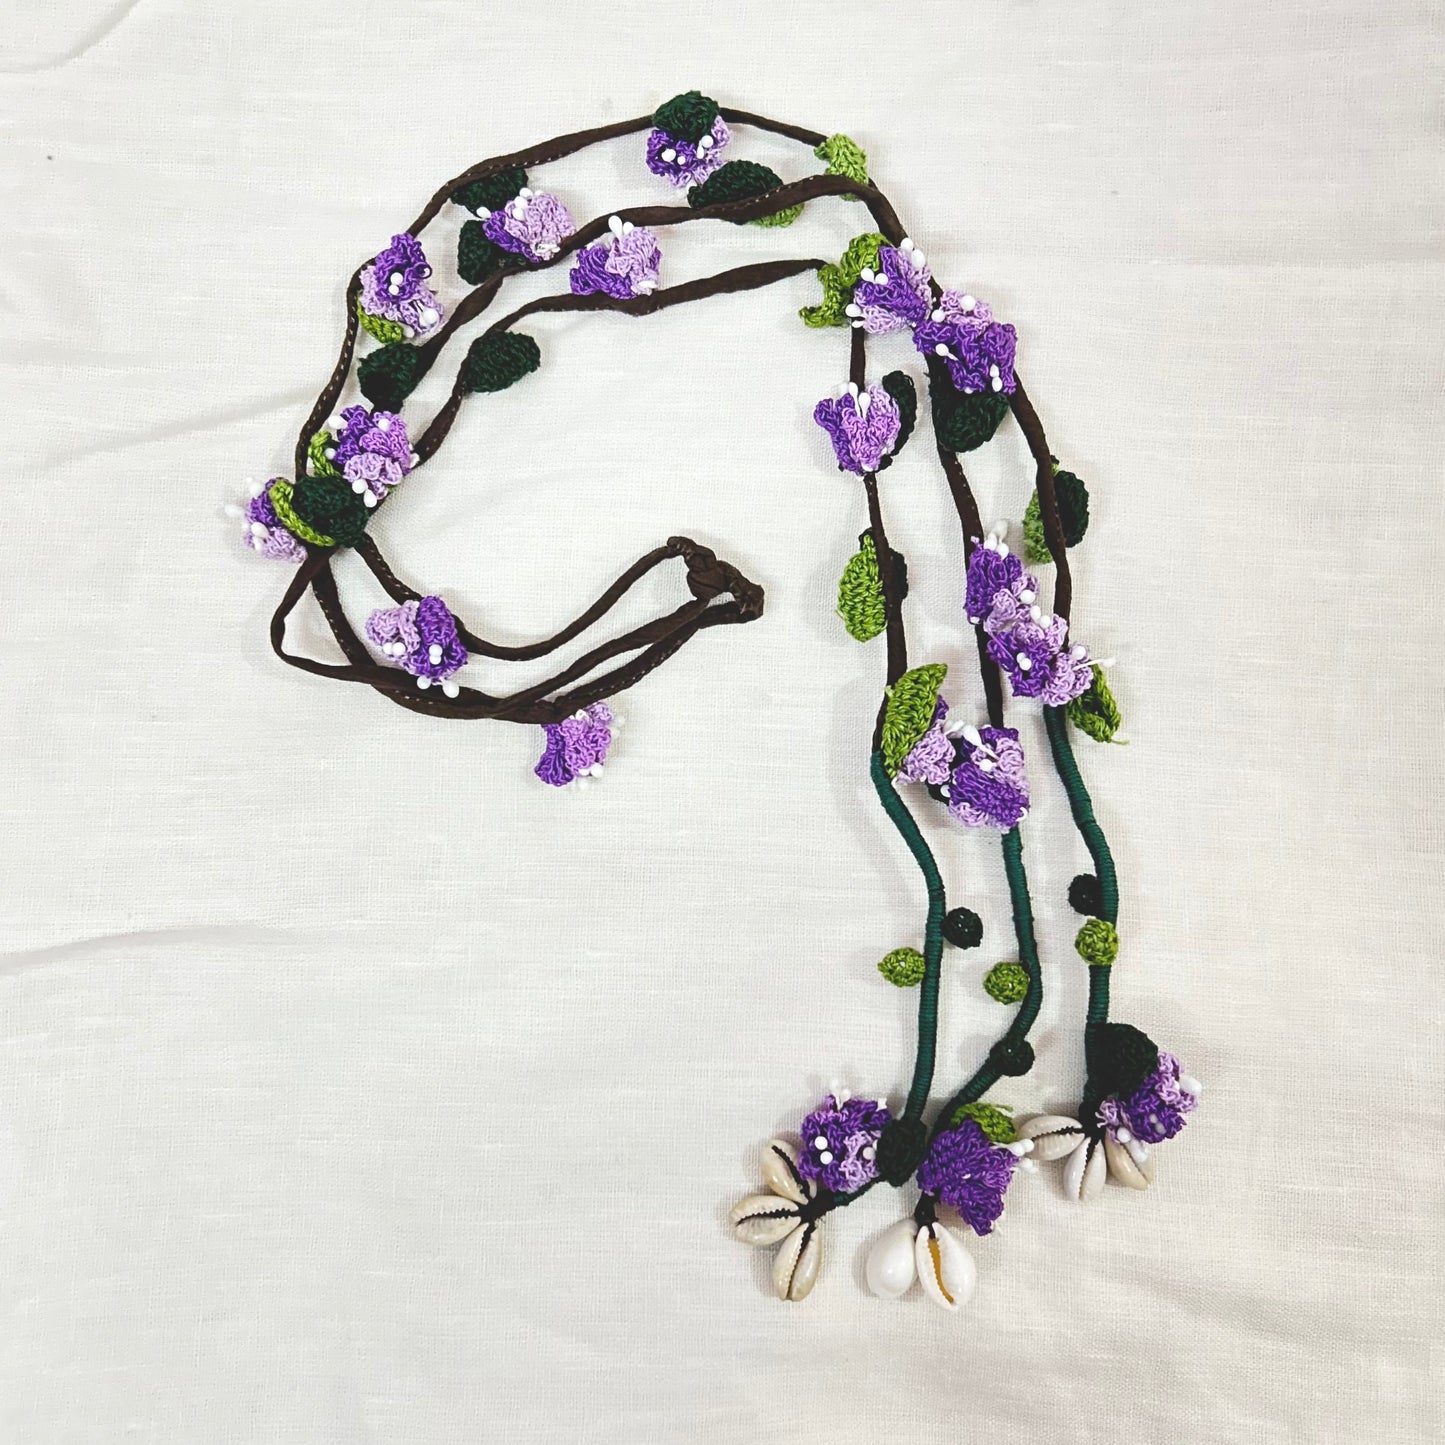 Purple Crochet Hair Parandi at Kamakhyaa by Ikriit'm. This item is Accessories, Cotton yarn, Crochet, Free Size, Hair Accessories, Ikriit'm, Natural, Purple